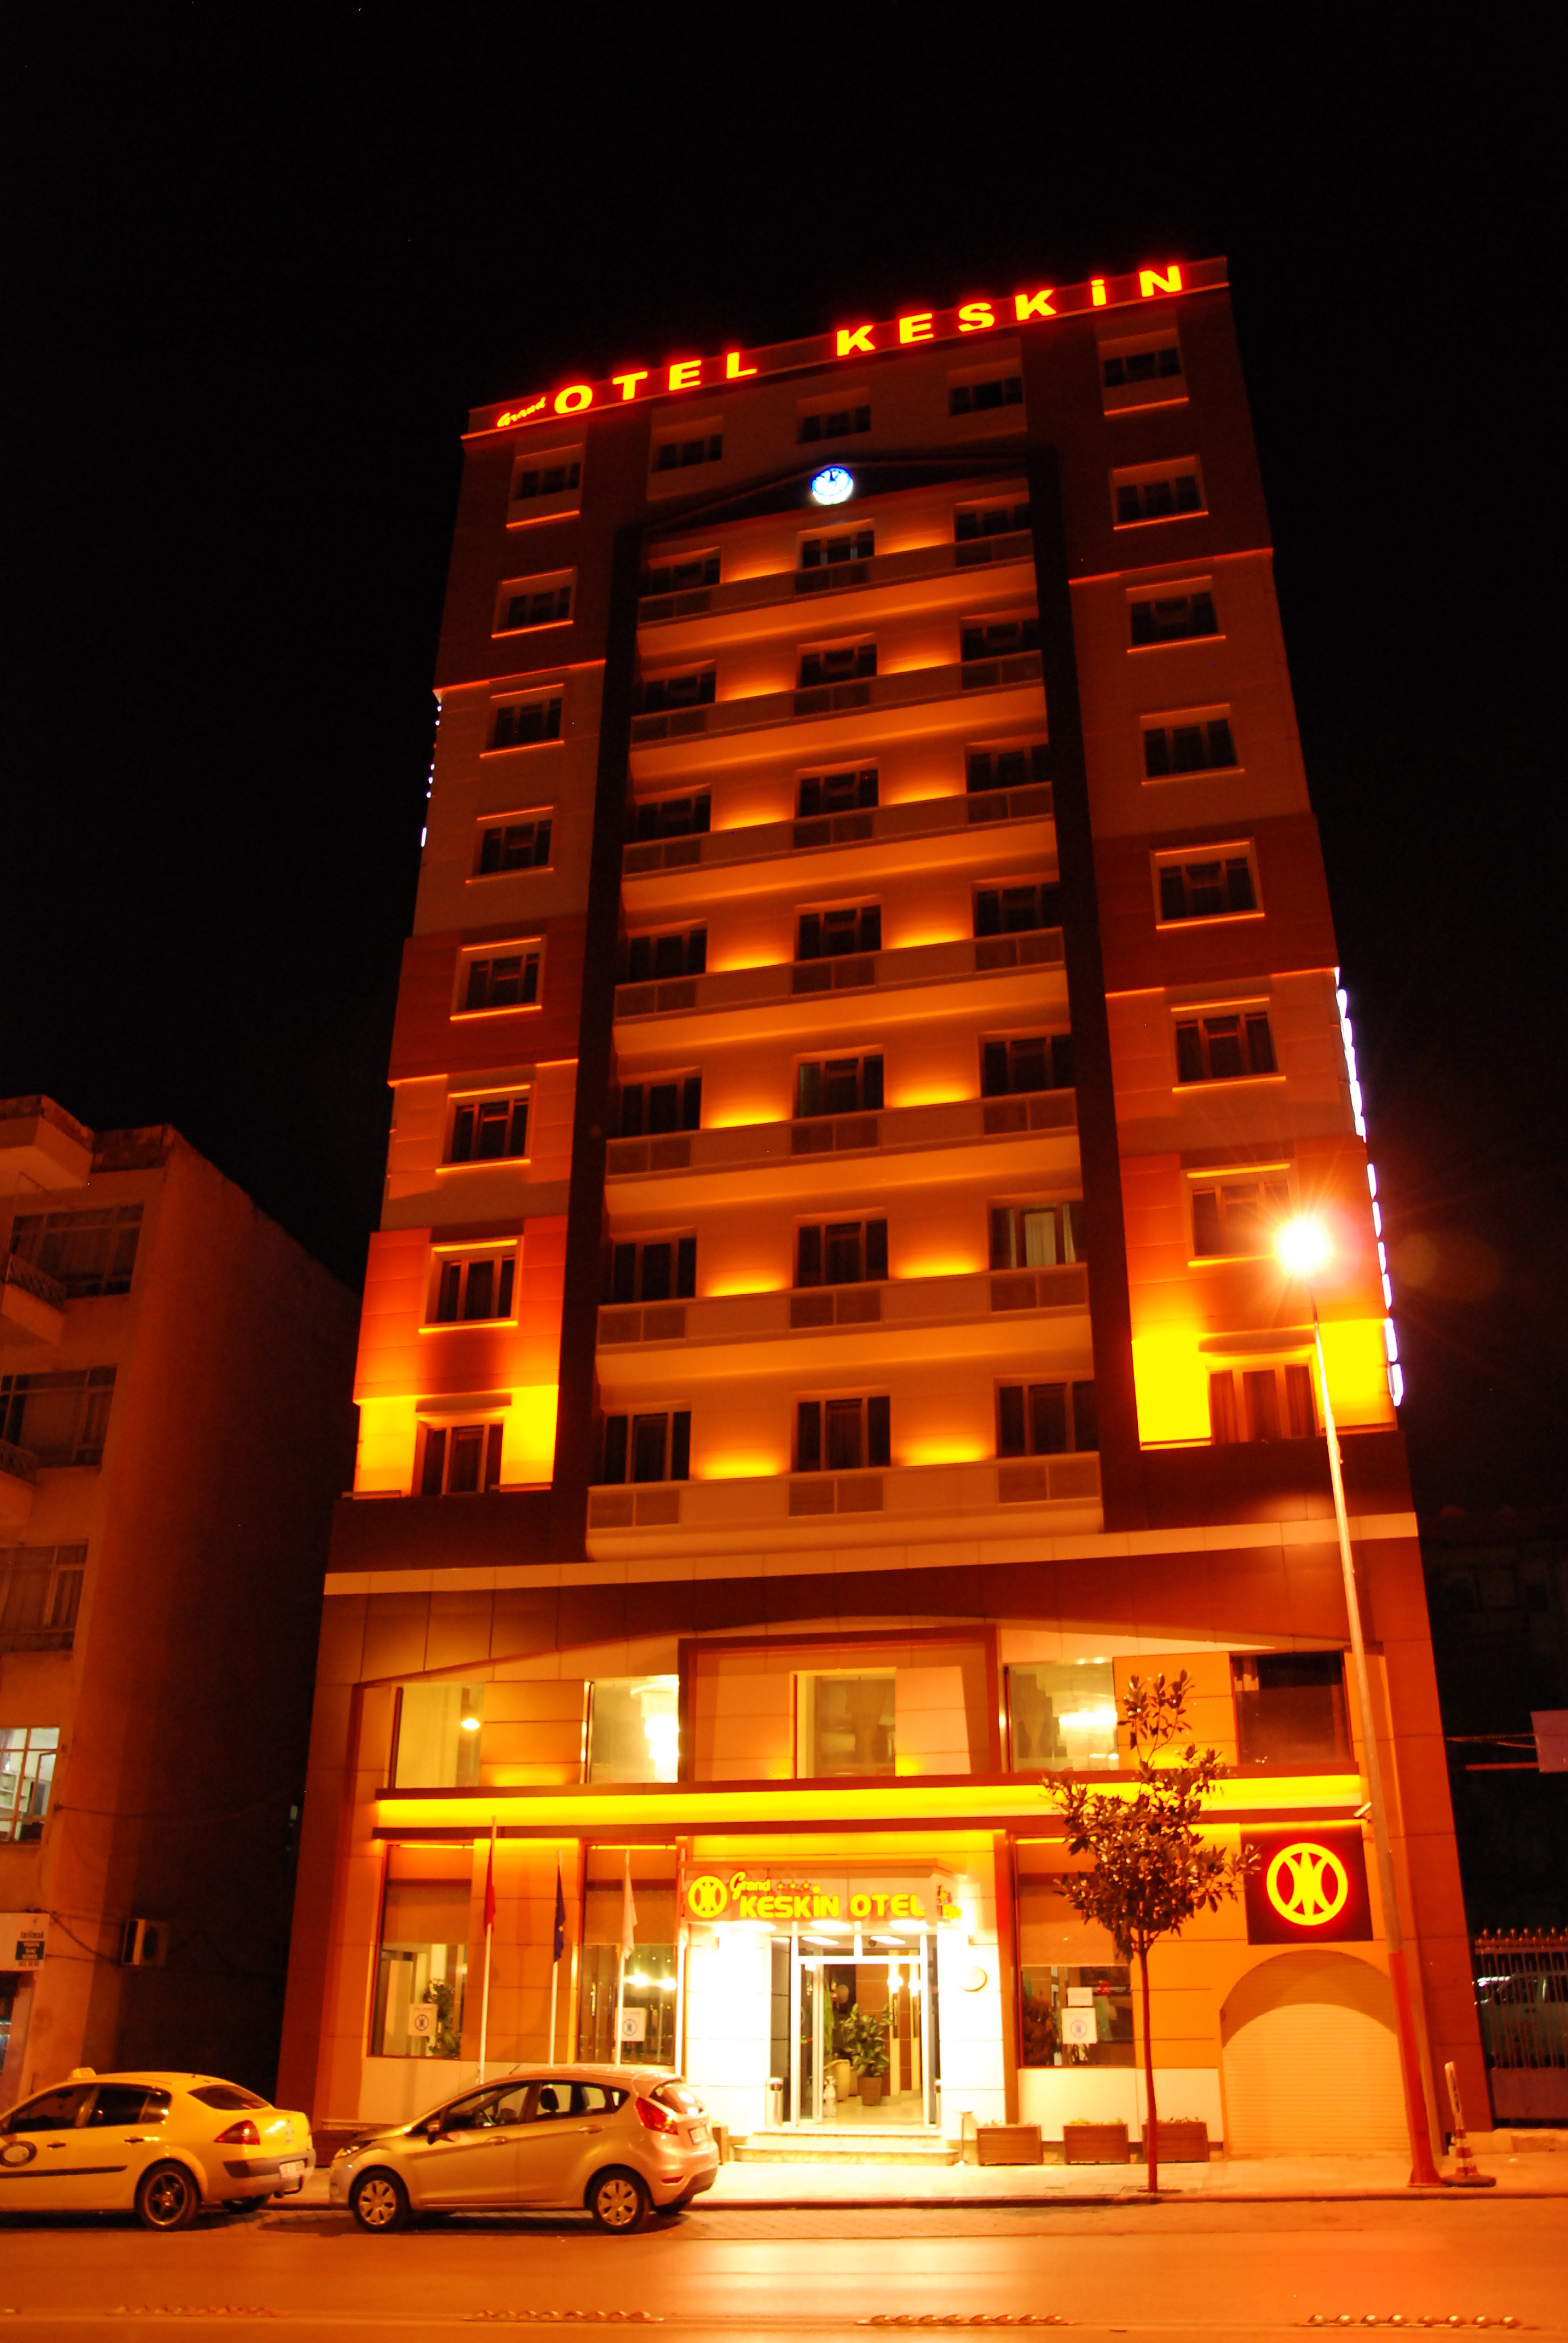 Grand Keskin Hotel